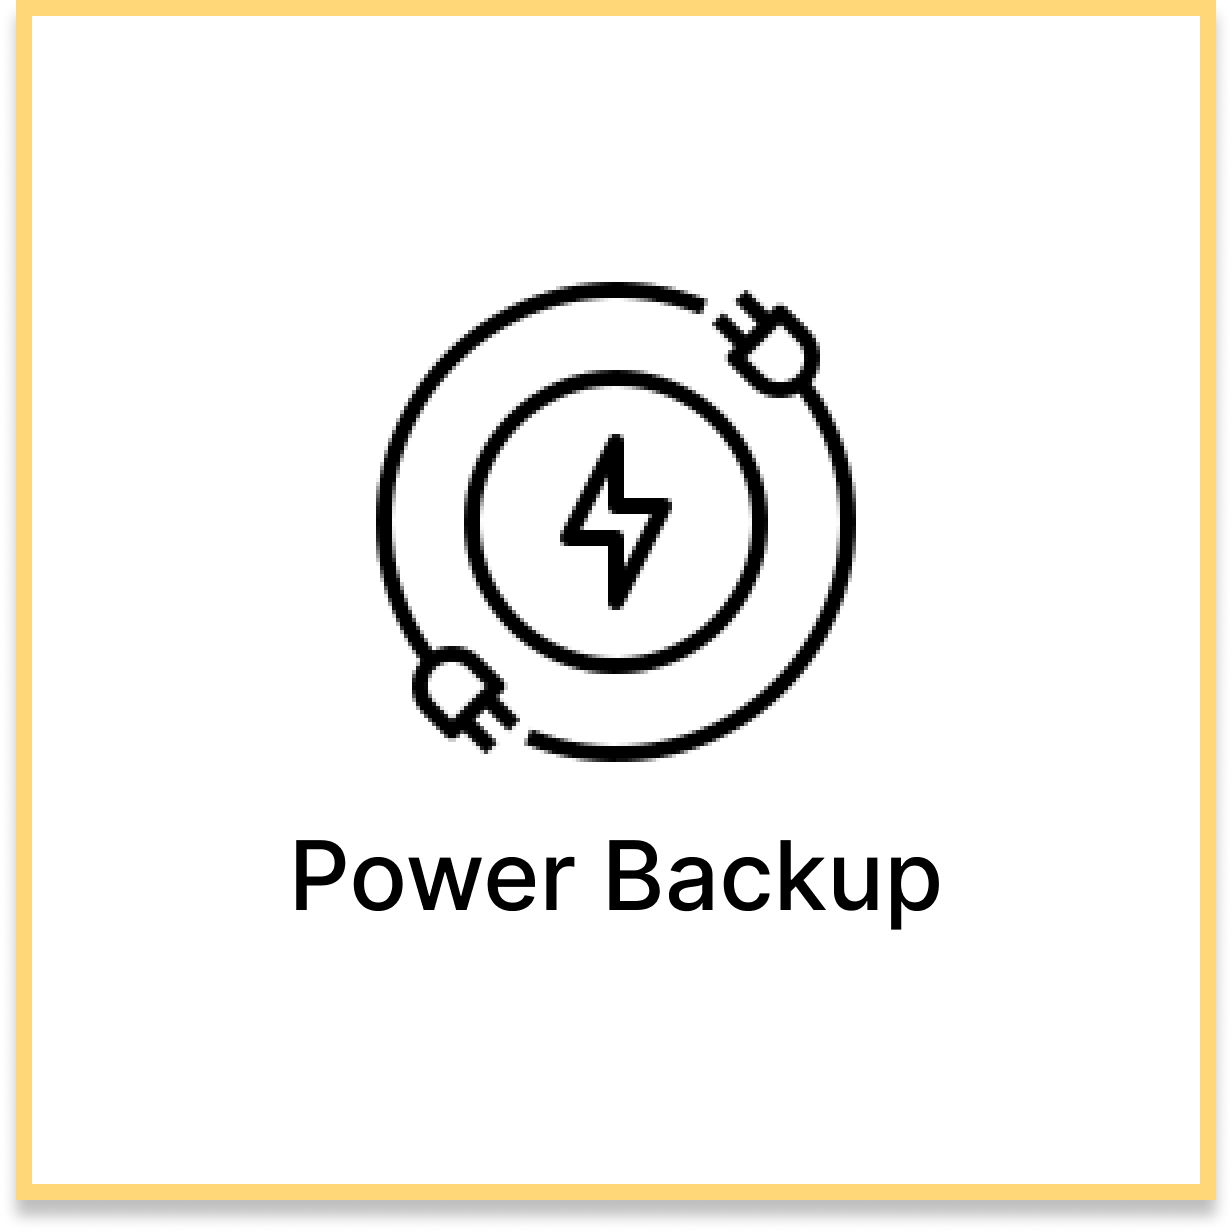 Power backup